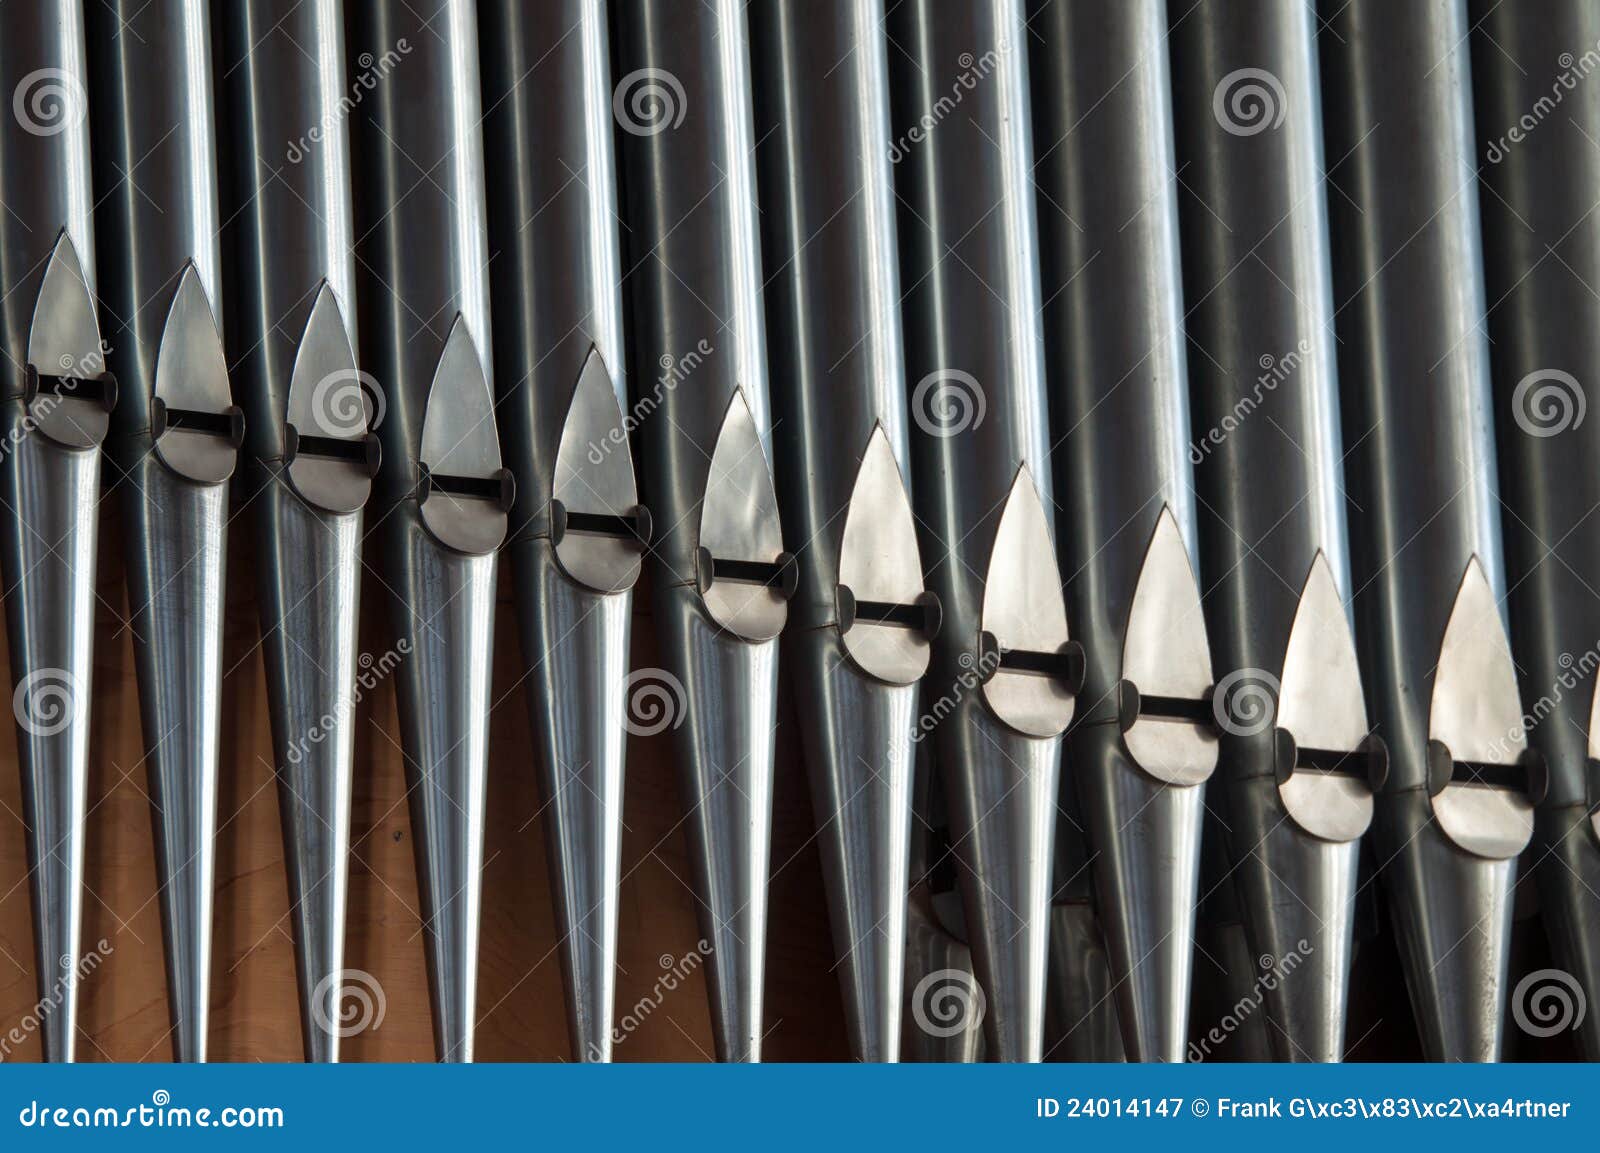 organ pipes clipart - photo #48